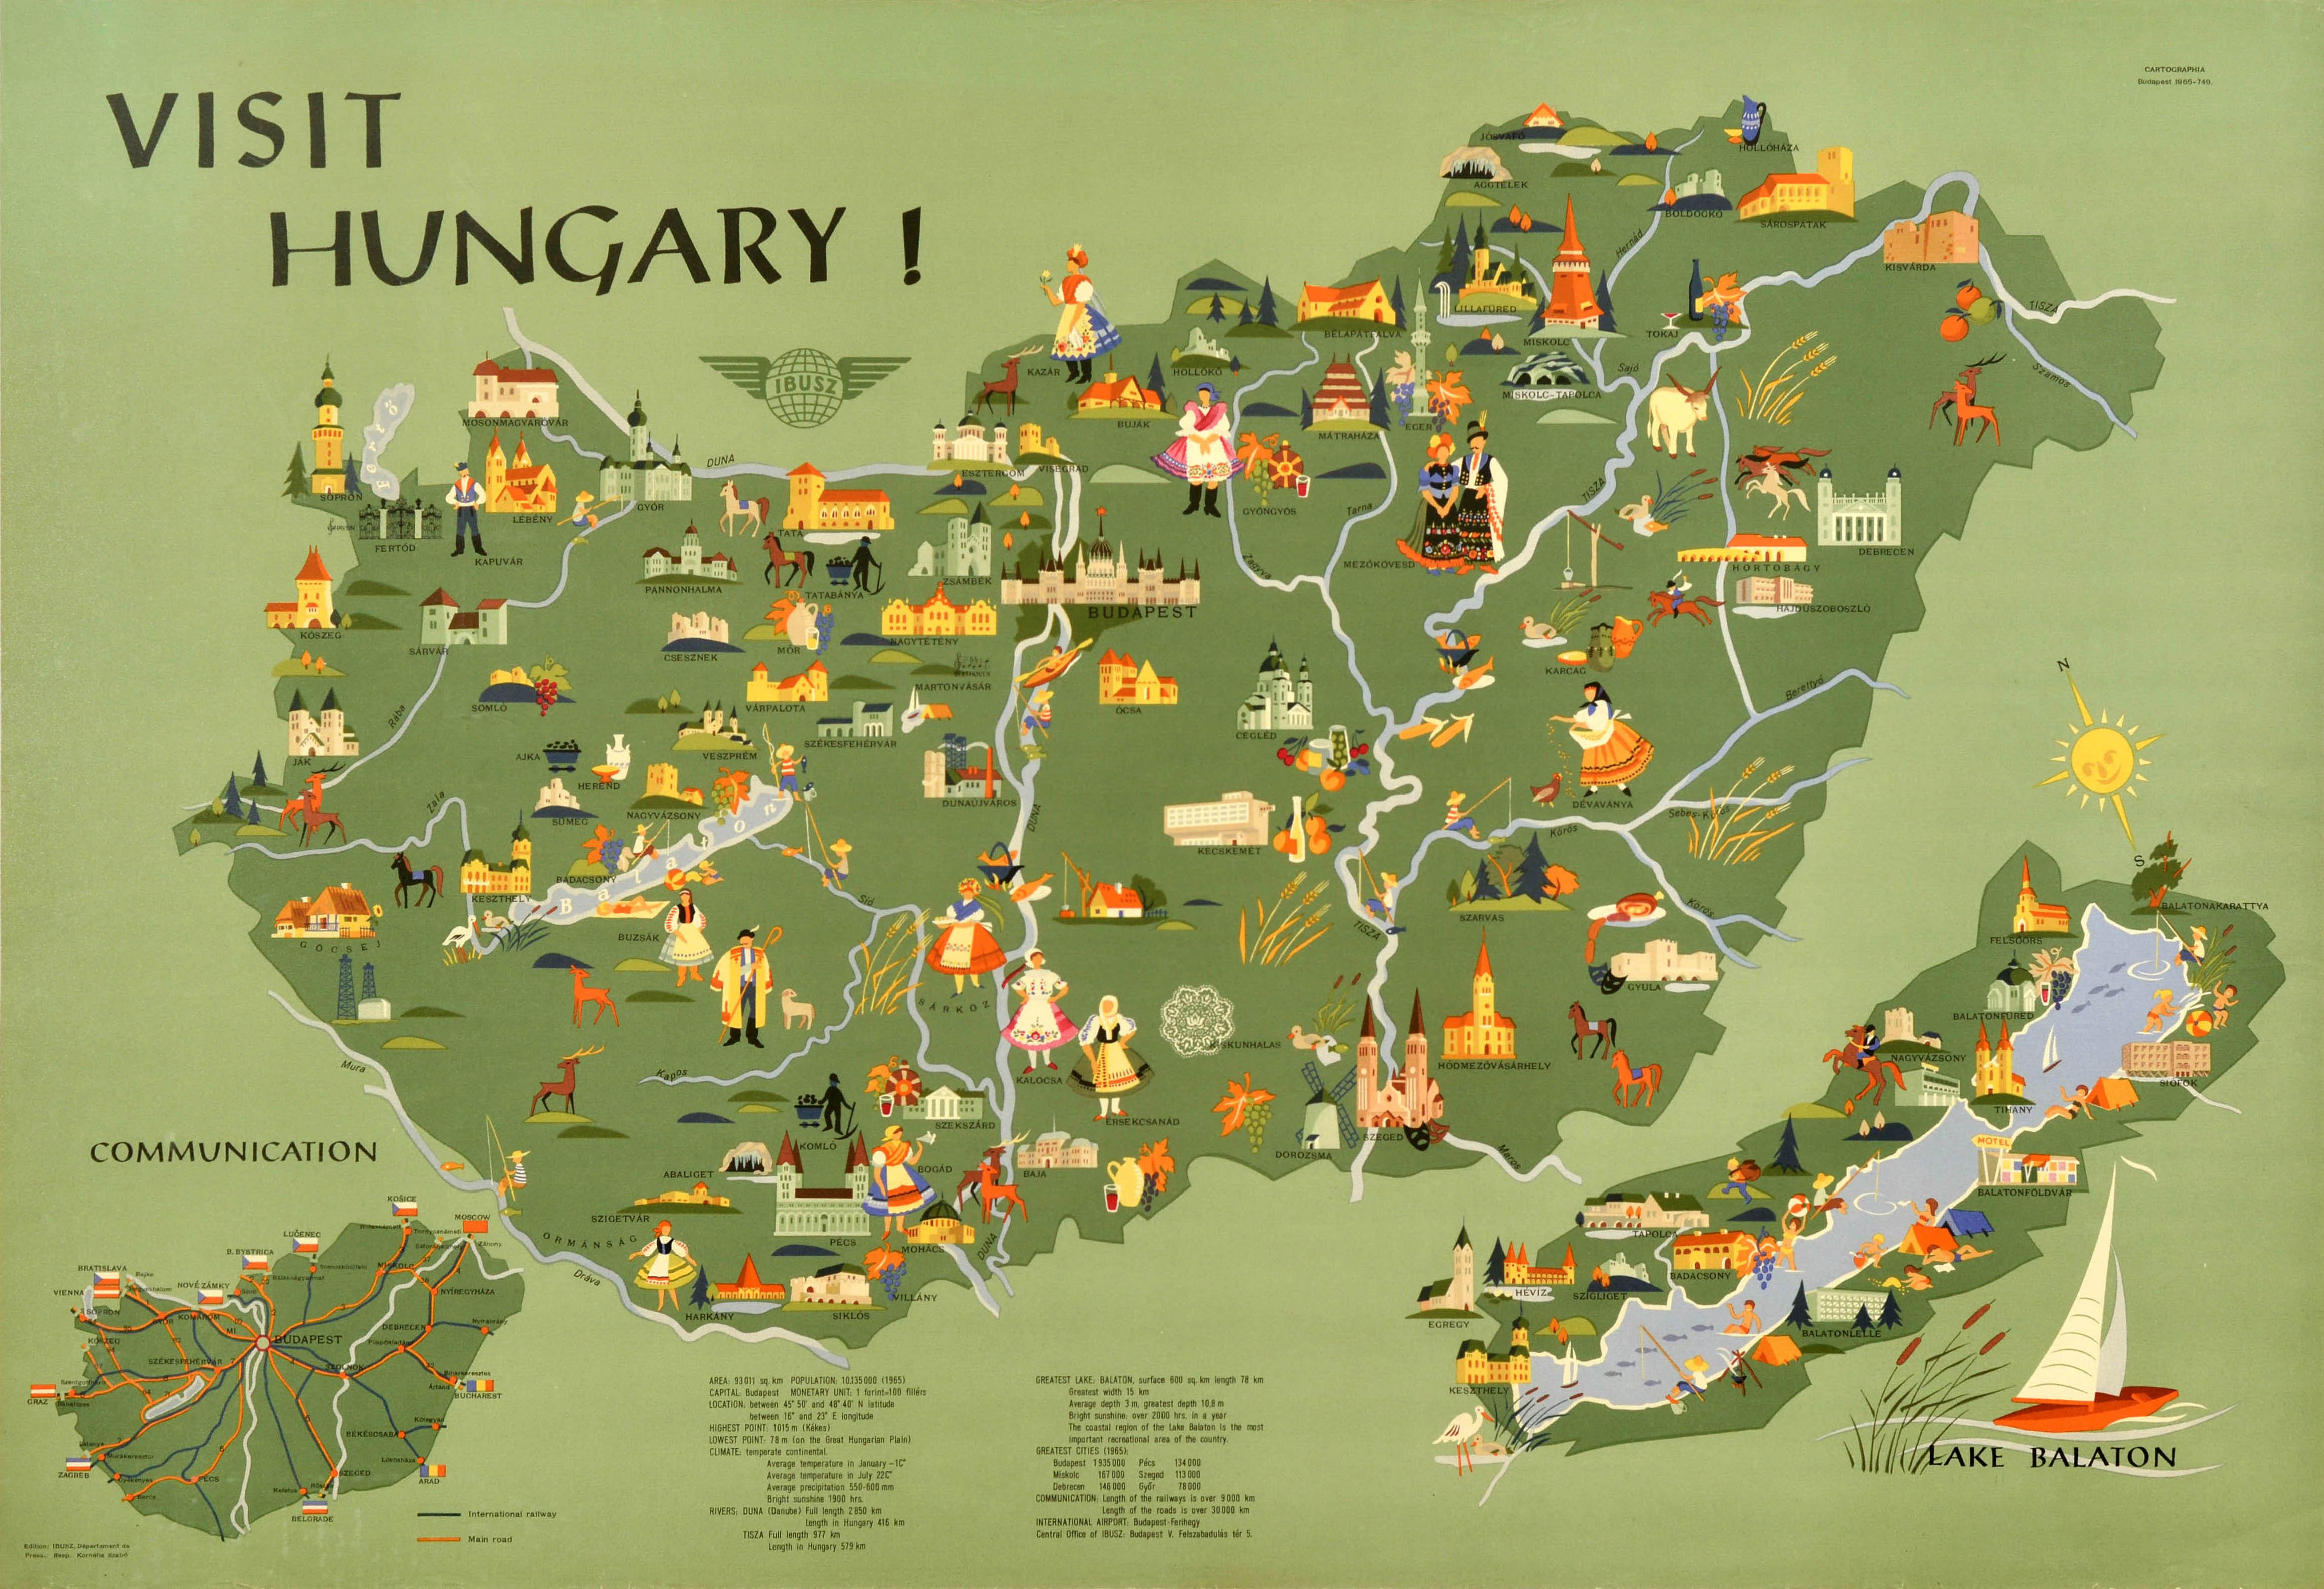 Unknown Print - Original Vintage Travel Poster Visit Hungary Pictorial Map Budapest Lake Balaton